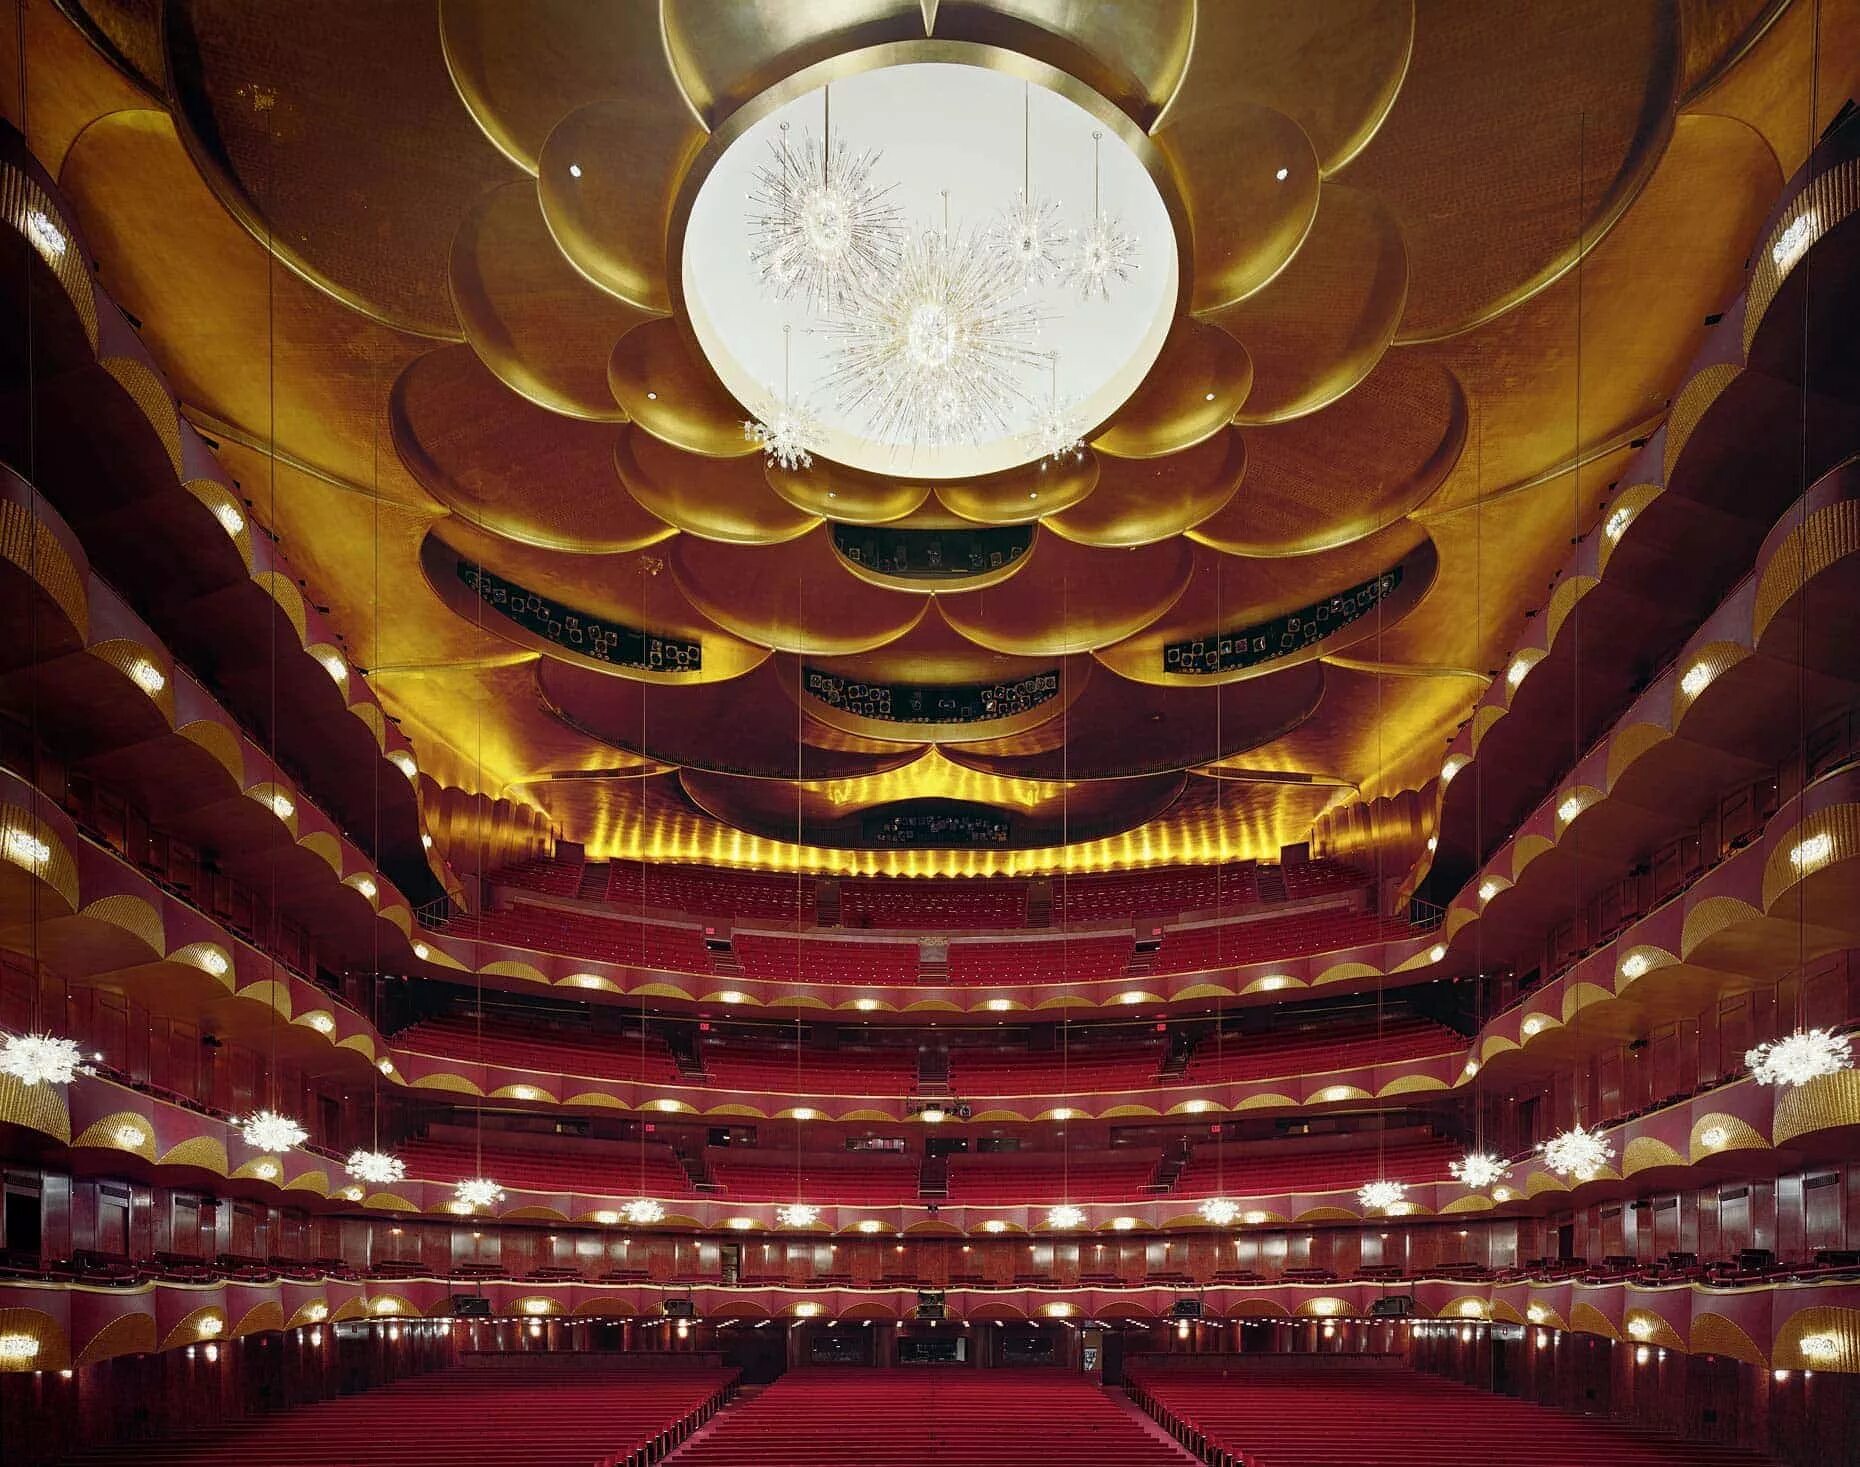 Метрополитен-опера, Нью-Йорк, США. The Metropolitan Opera House Нью-Йорк США. Метрополитен опера в Нью-Йорке зал. Метрополитен опера театр. Названия известных театров